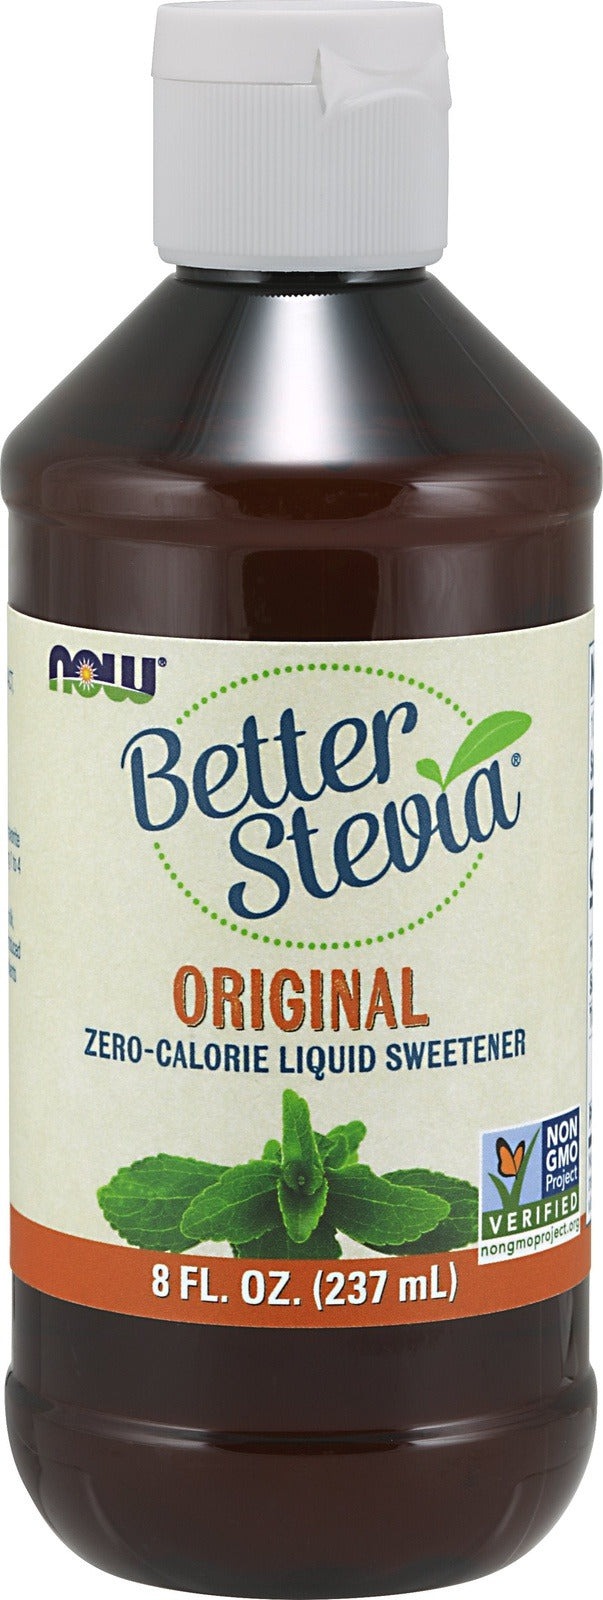 NOW Better Stevia Zero-Calorie Liquid Sweetener - Original Image 2